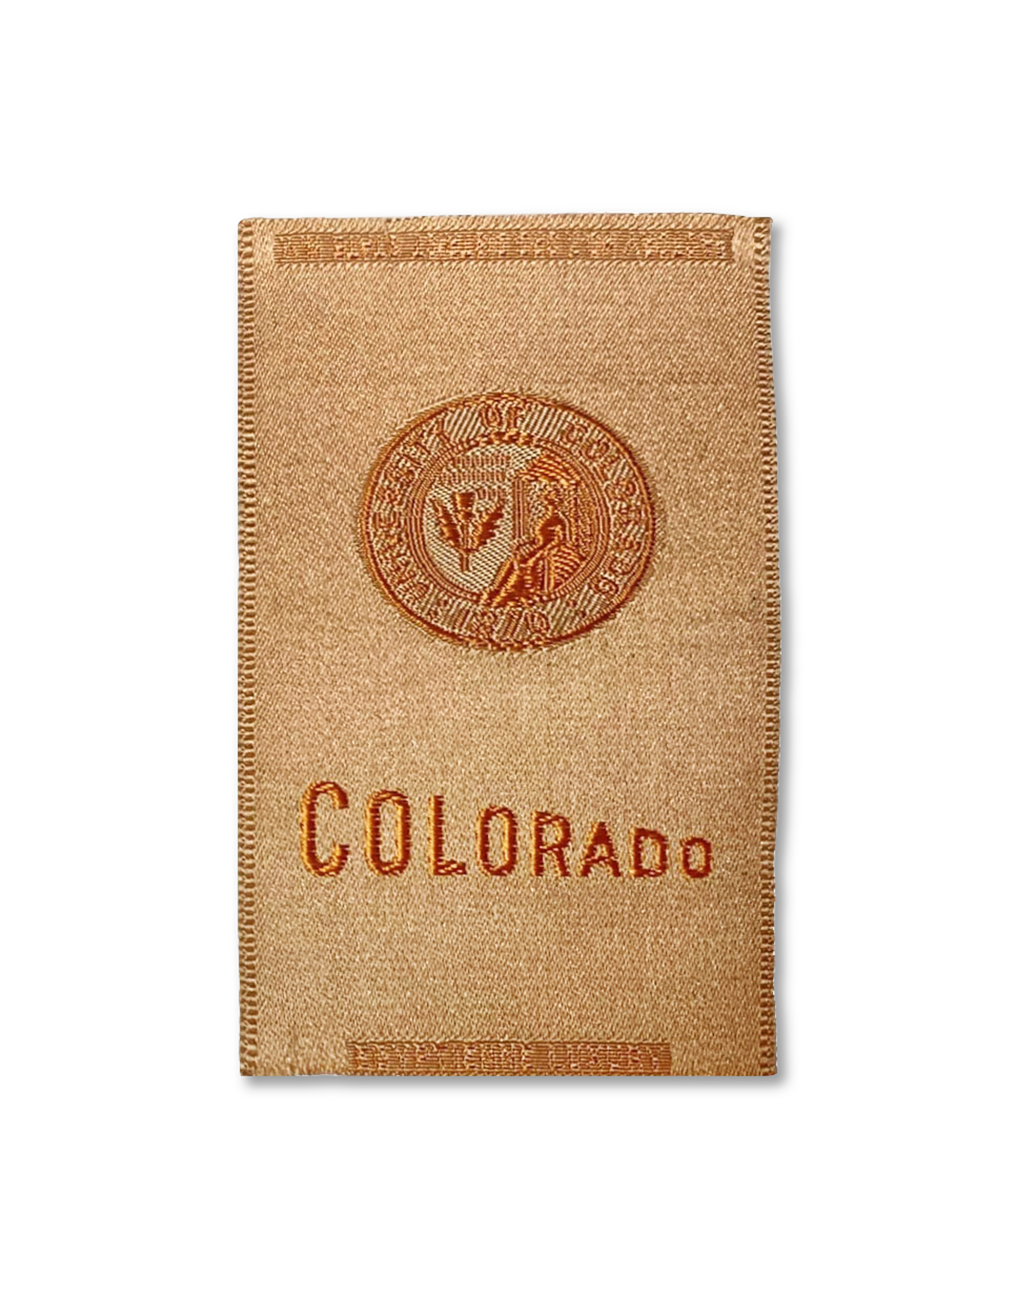 University of Colorado Silk Paperweight